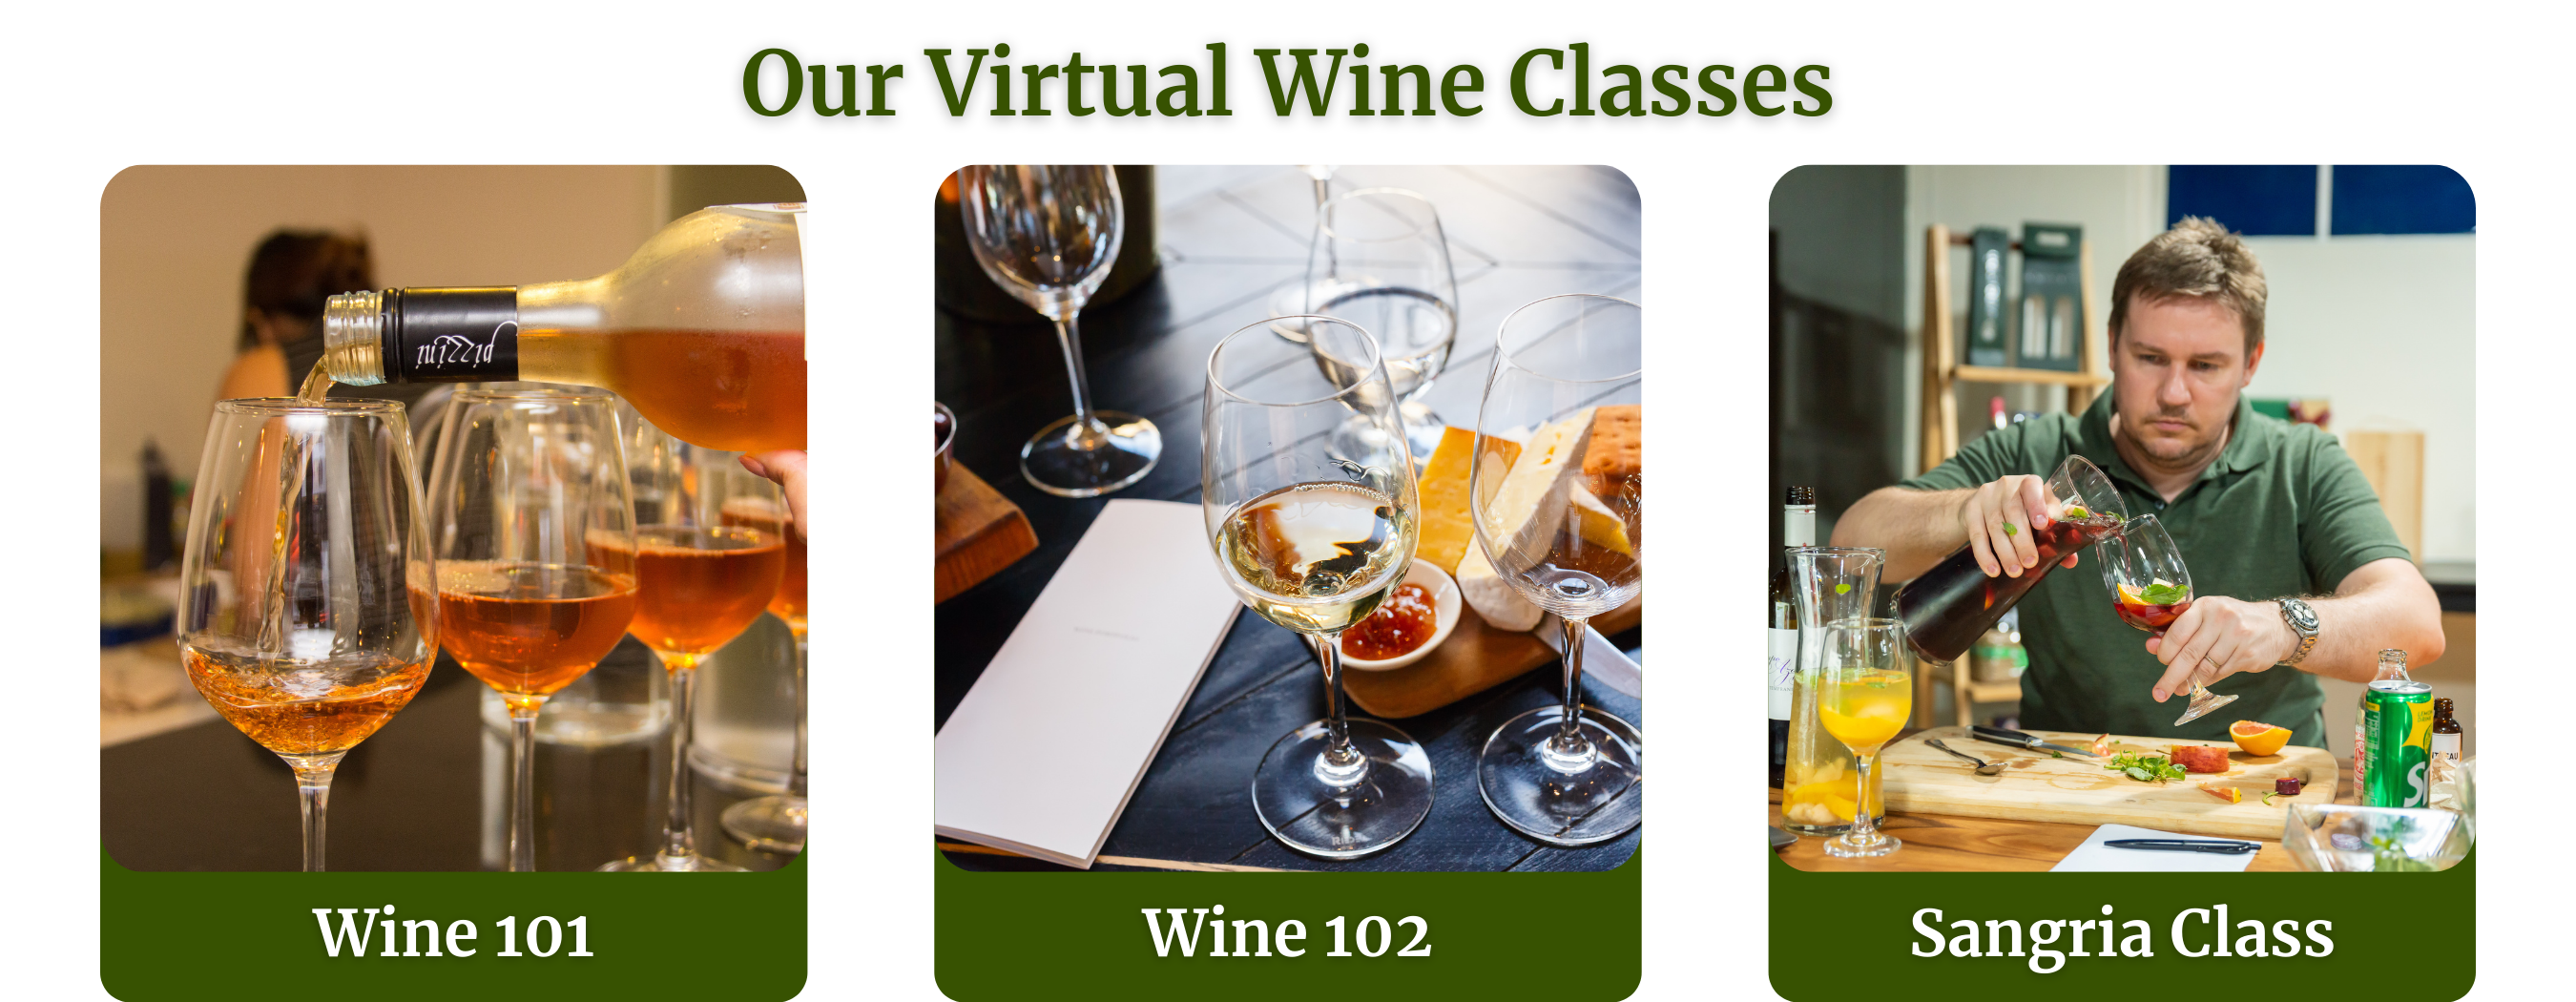 winery.ph virtual wine classes